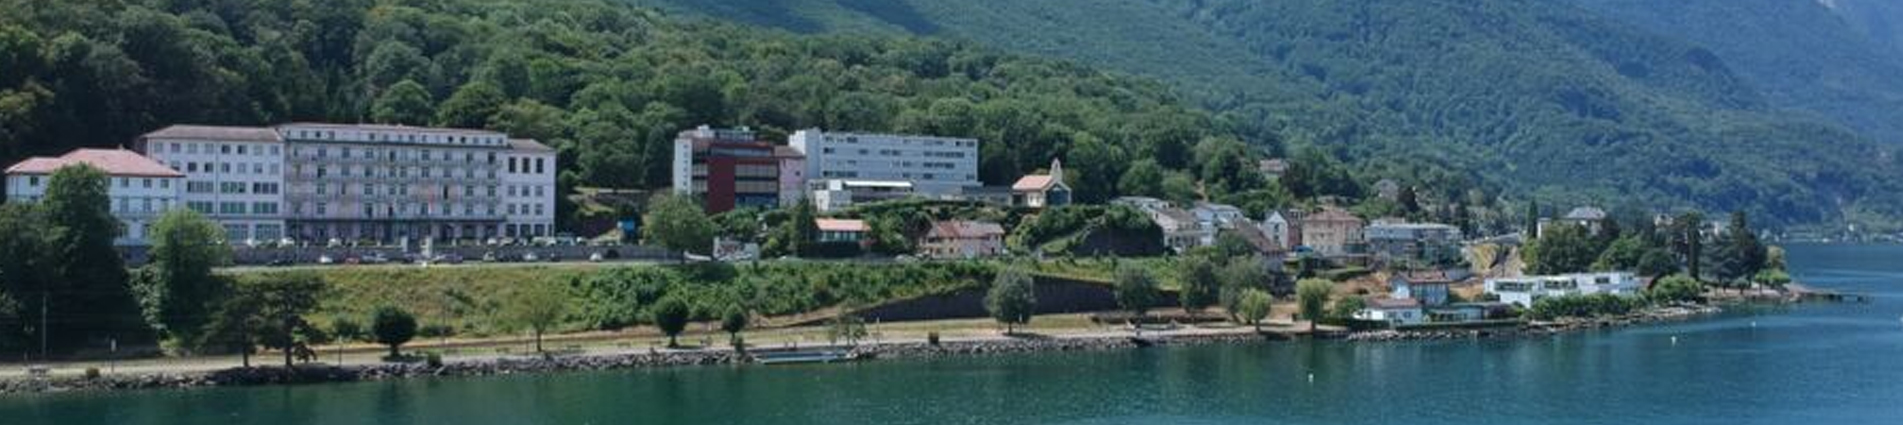 Cesar Ritz Colleges of Switzerland